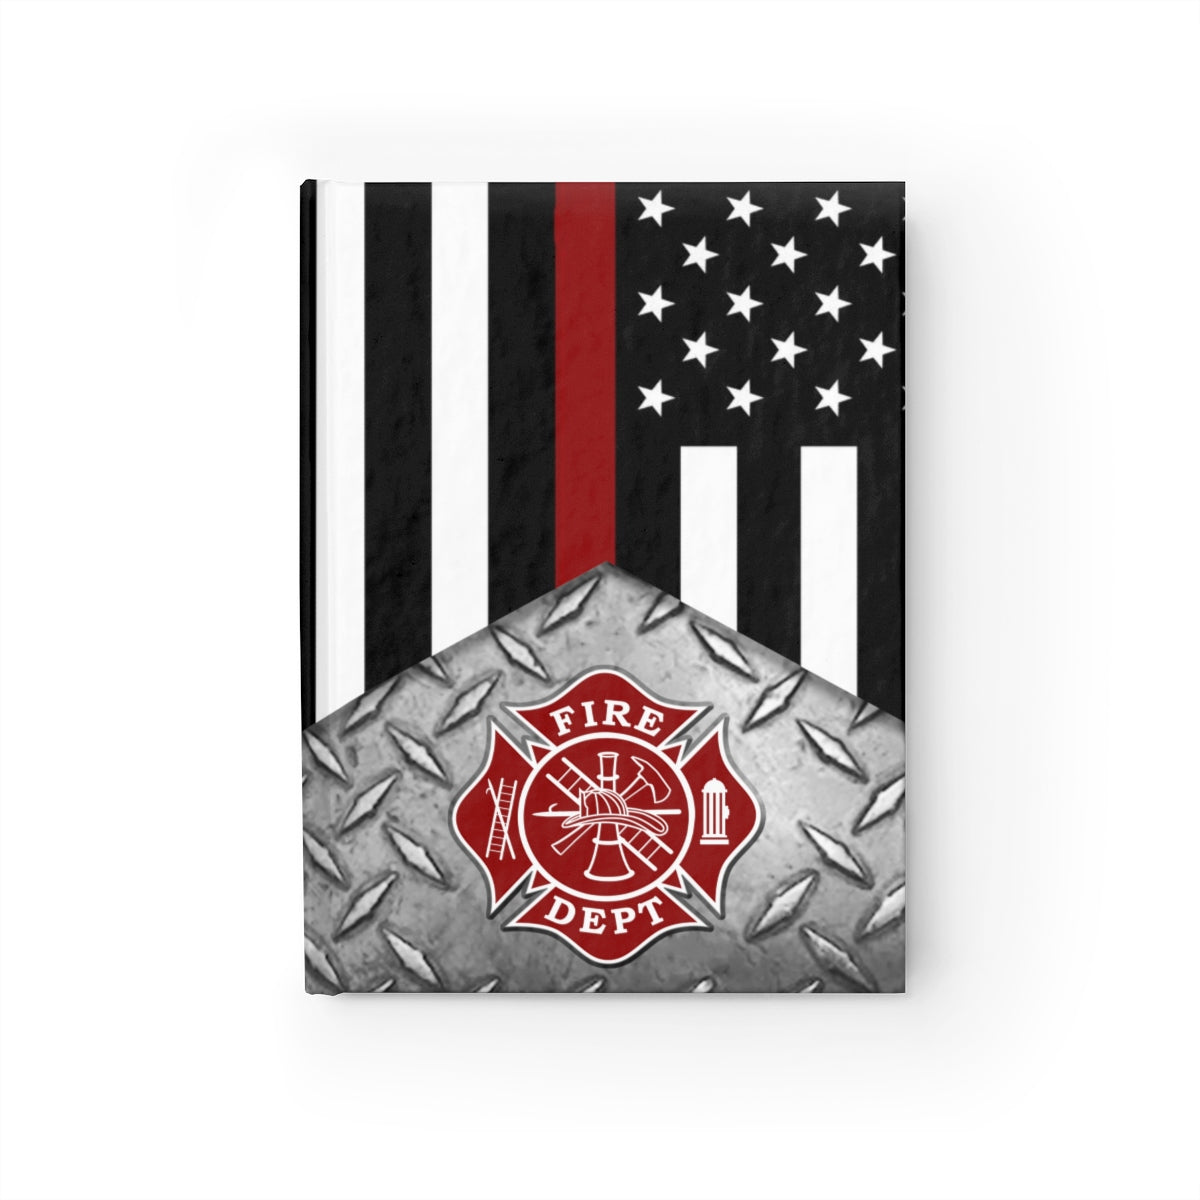 Firefighter  Thin Red Line Journal - Ruled Line - firestationstore.com